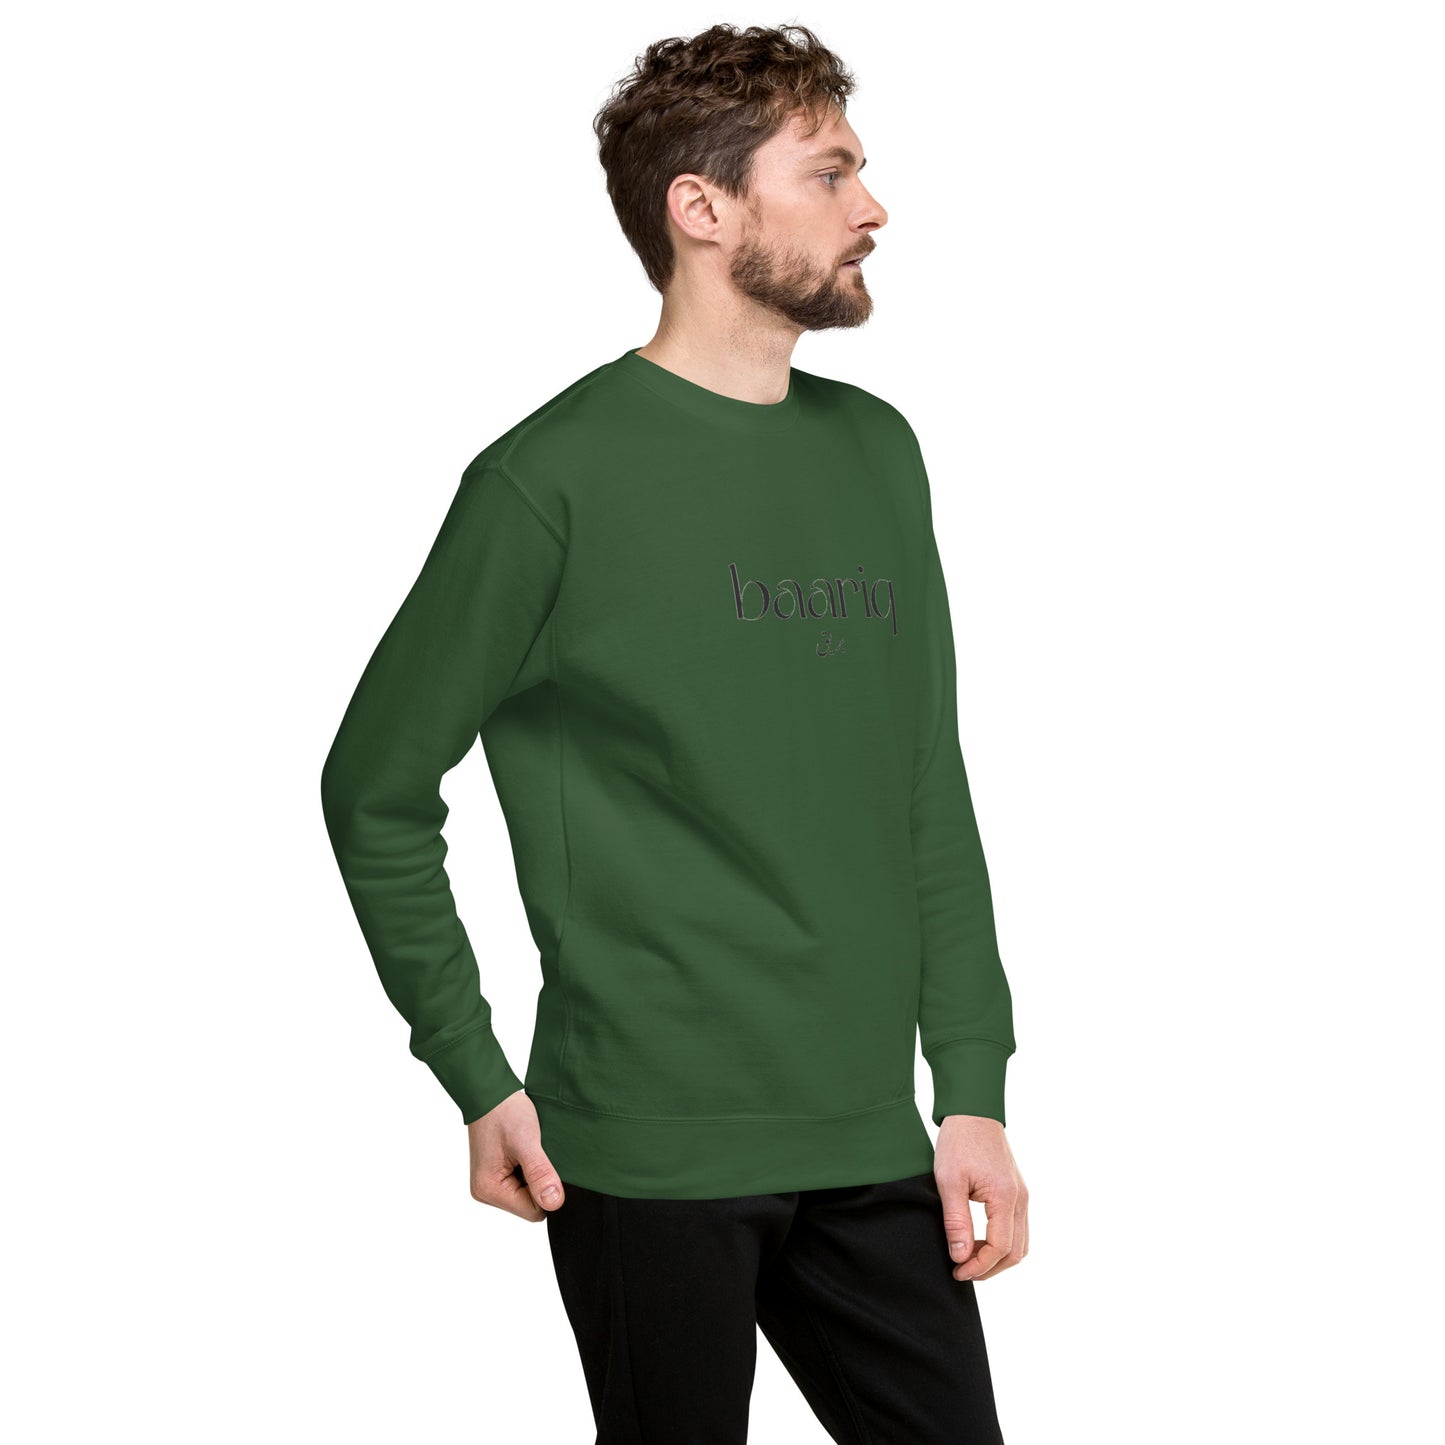 Baariq Unisex Premium Sweatshirt